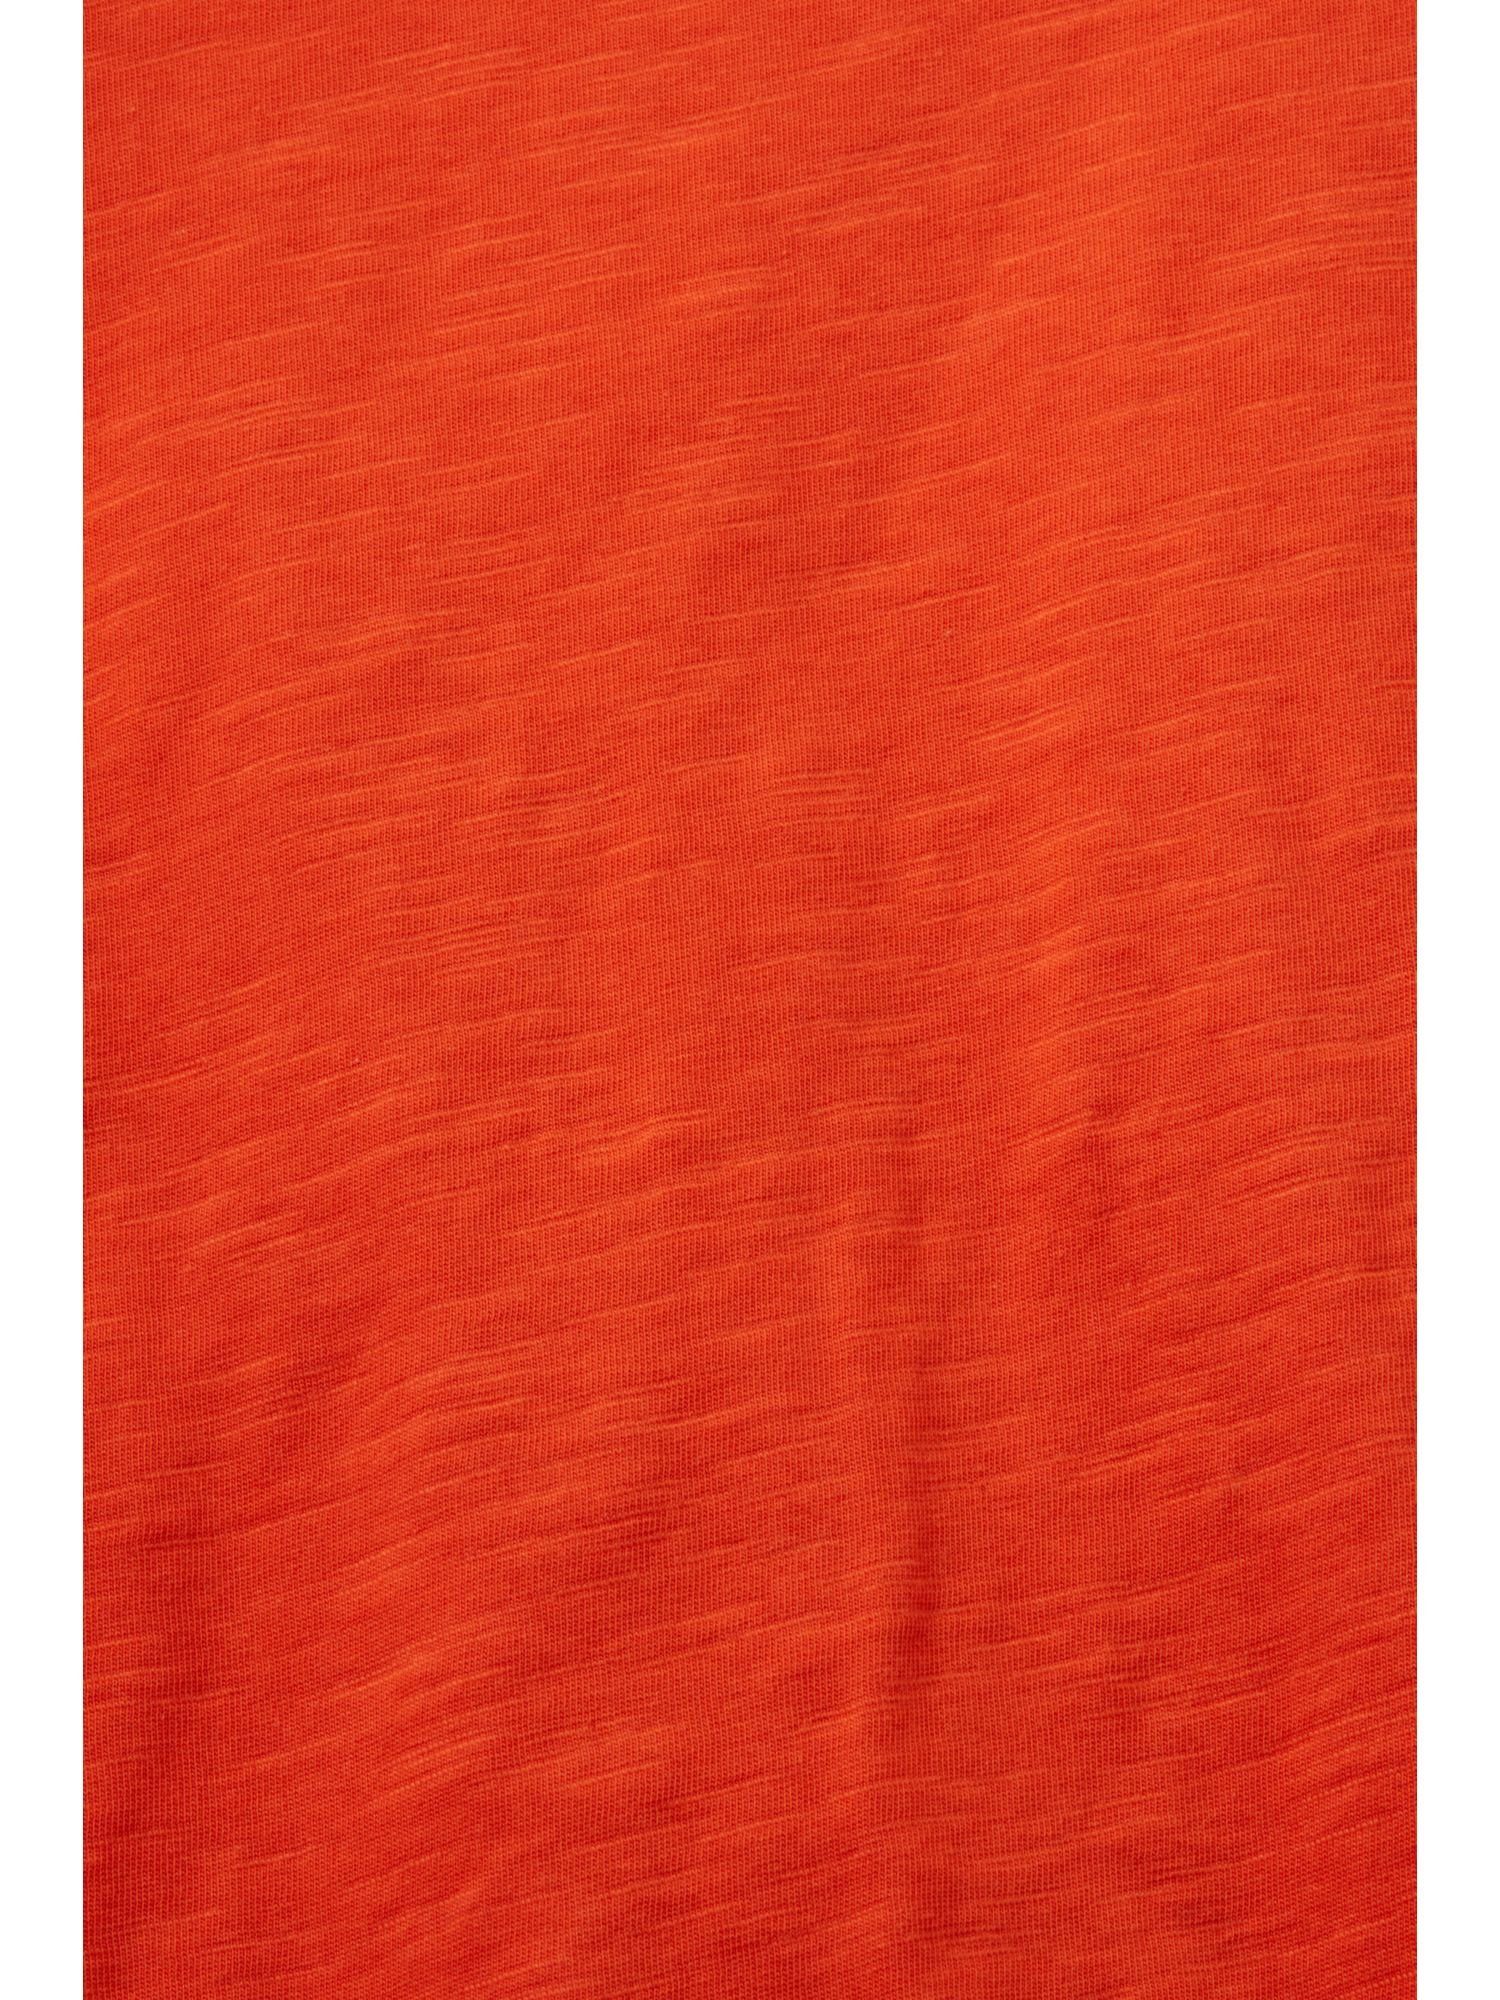 Baumwolle Esprit 3/4-Arm-Shirt Longsleeve, 100 BRIGHT ORANGE %